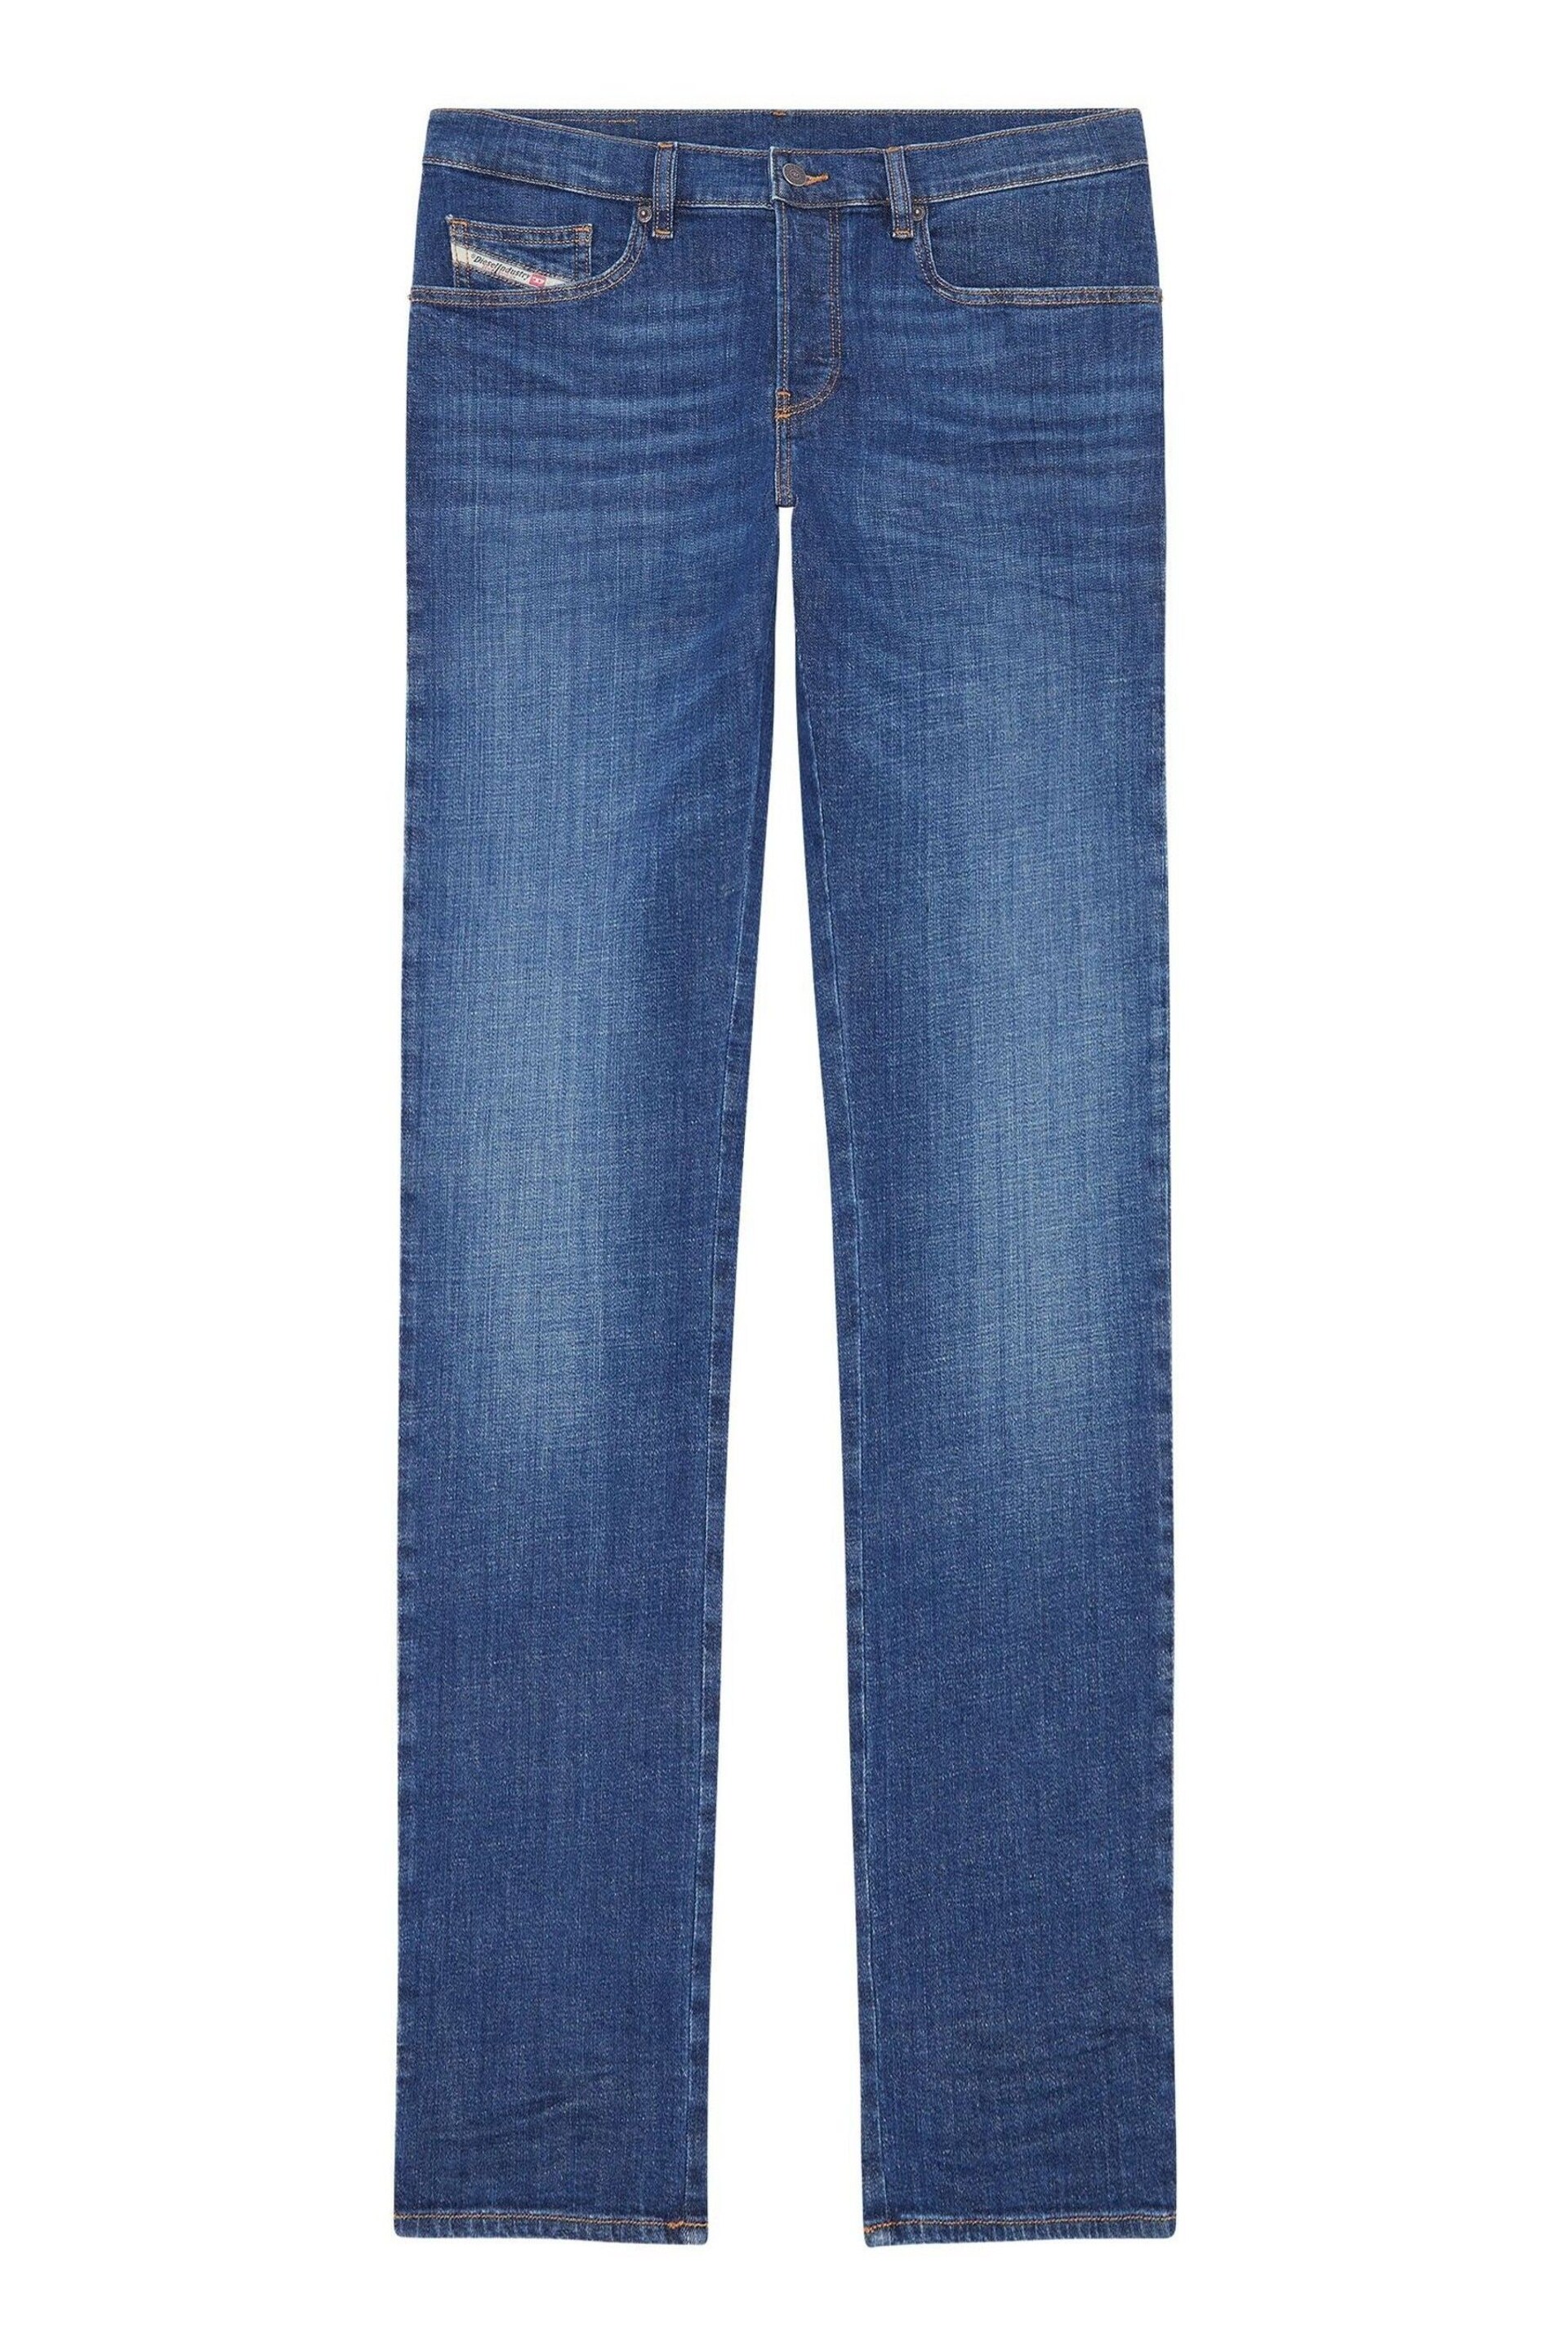 Diesel Straight Fit Light Blue Denim D-Mihtry Jeans - Image 5 of 6